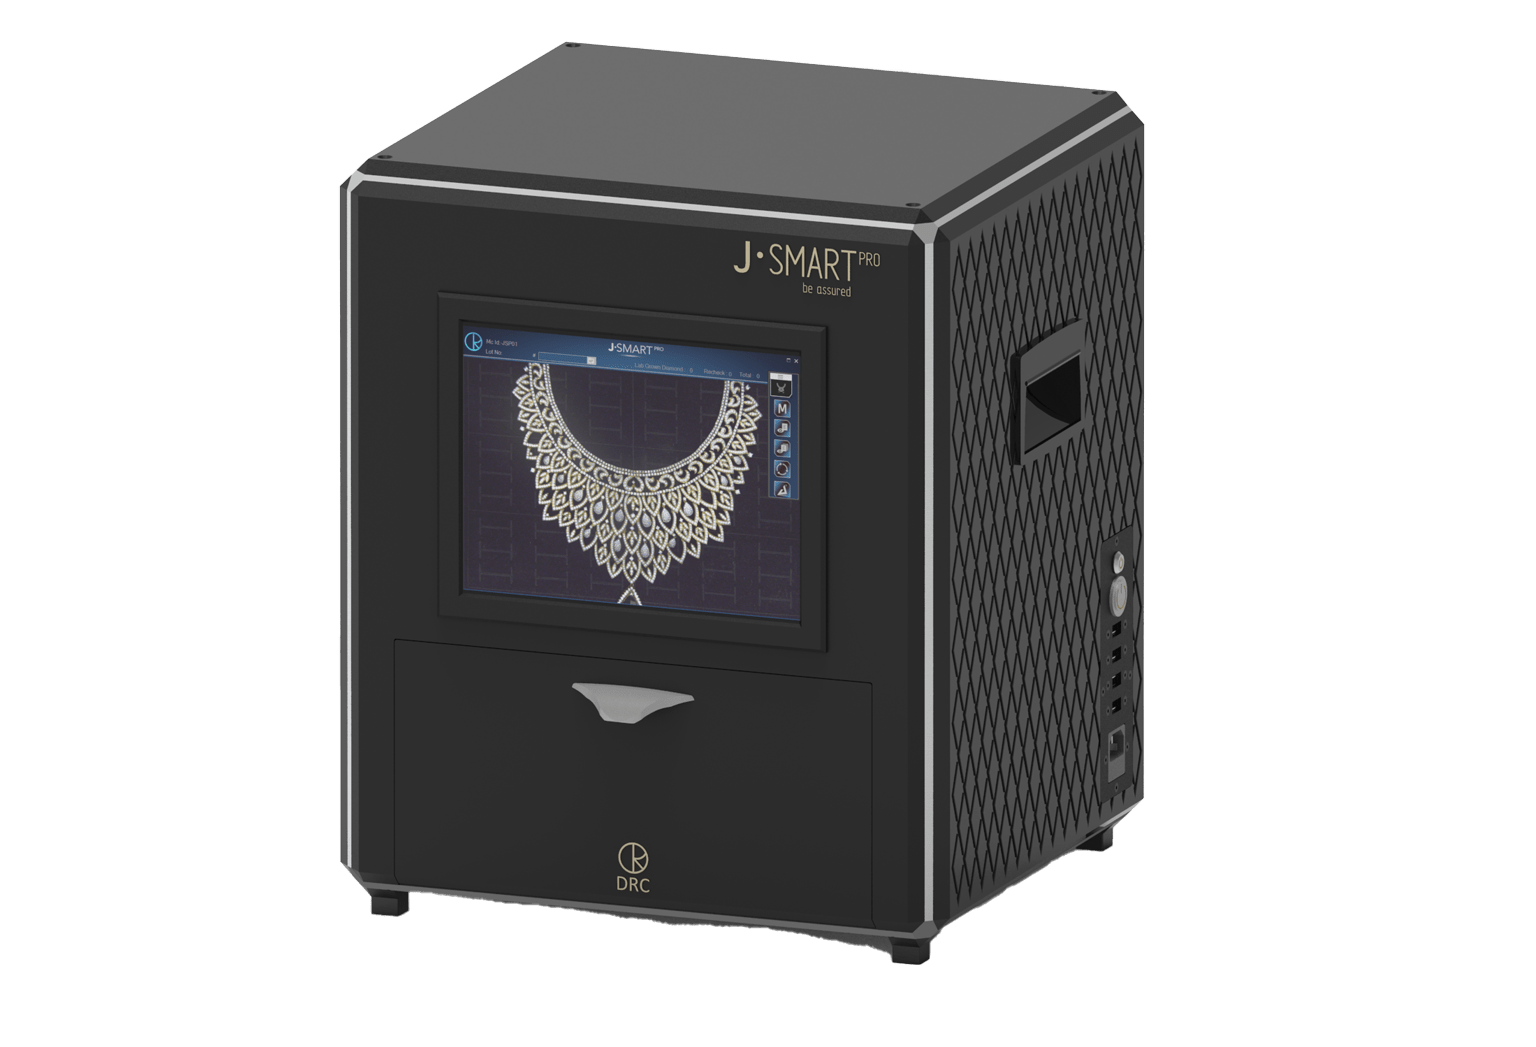 Best J Smart Pro Identify diamond Machine